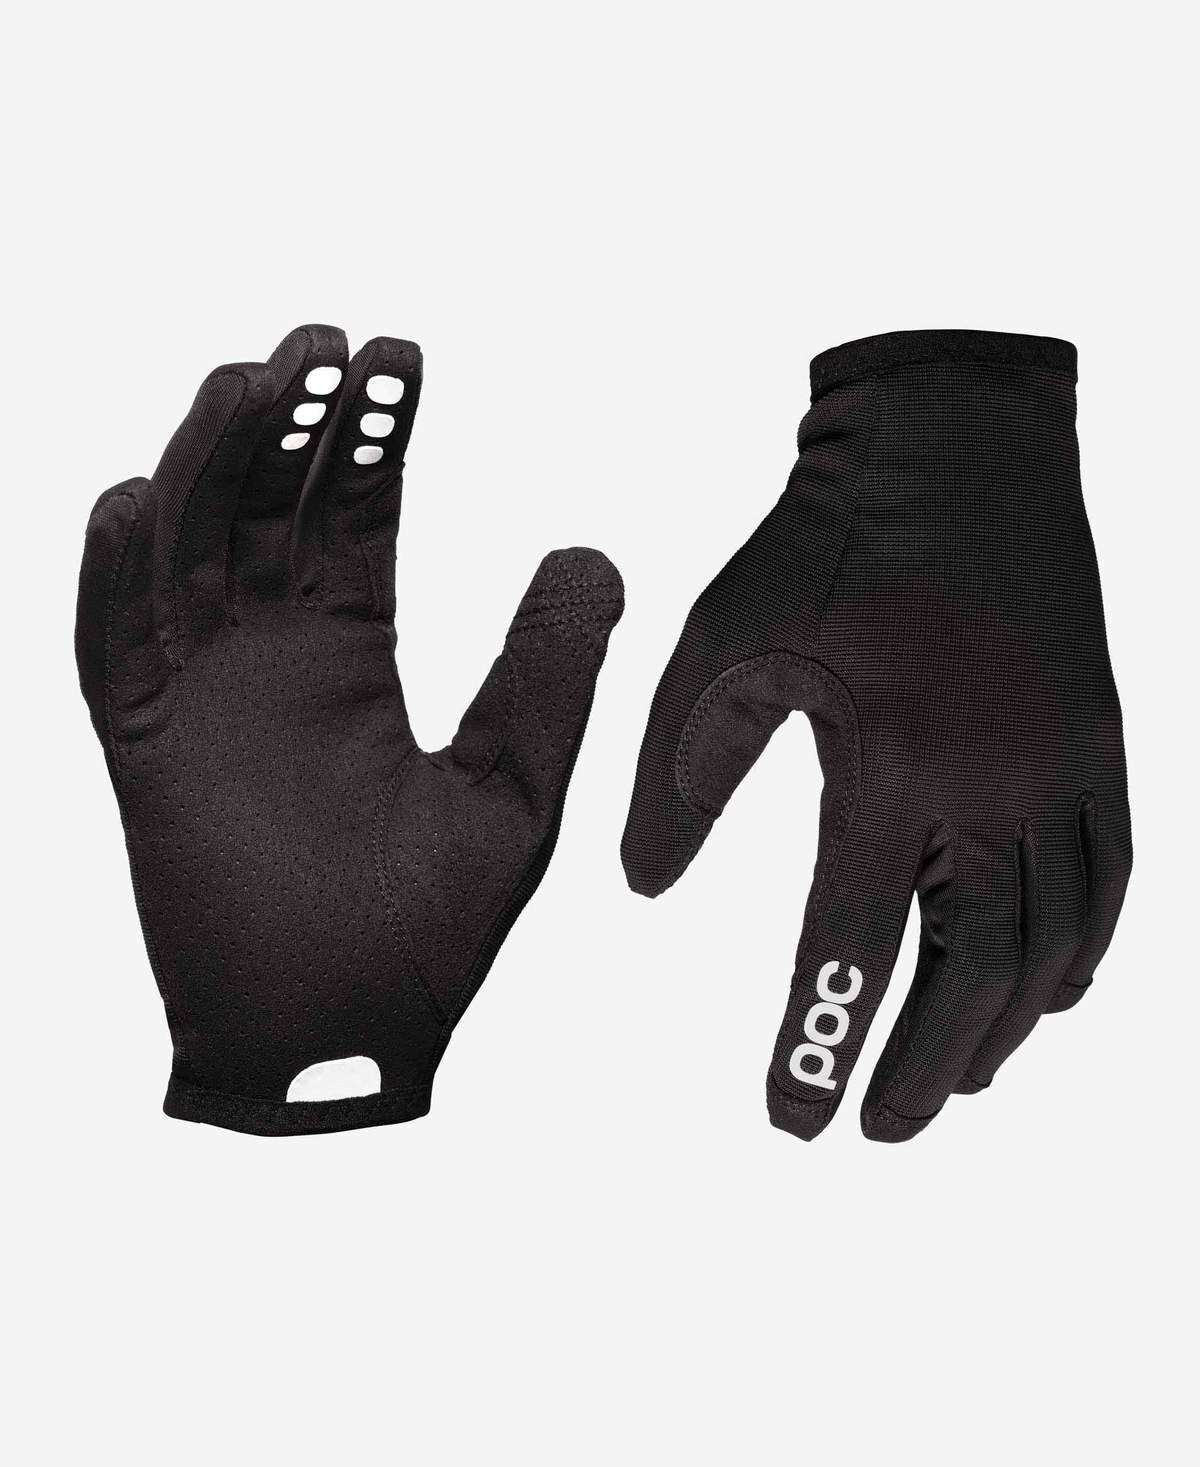 Poc Resistance Enduro Glove - Cycling gloves